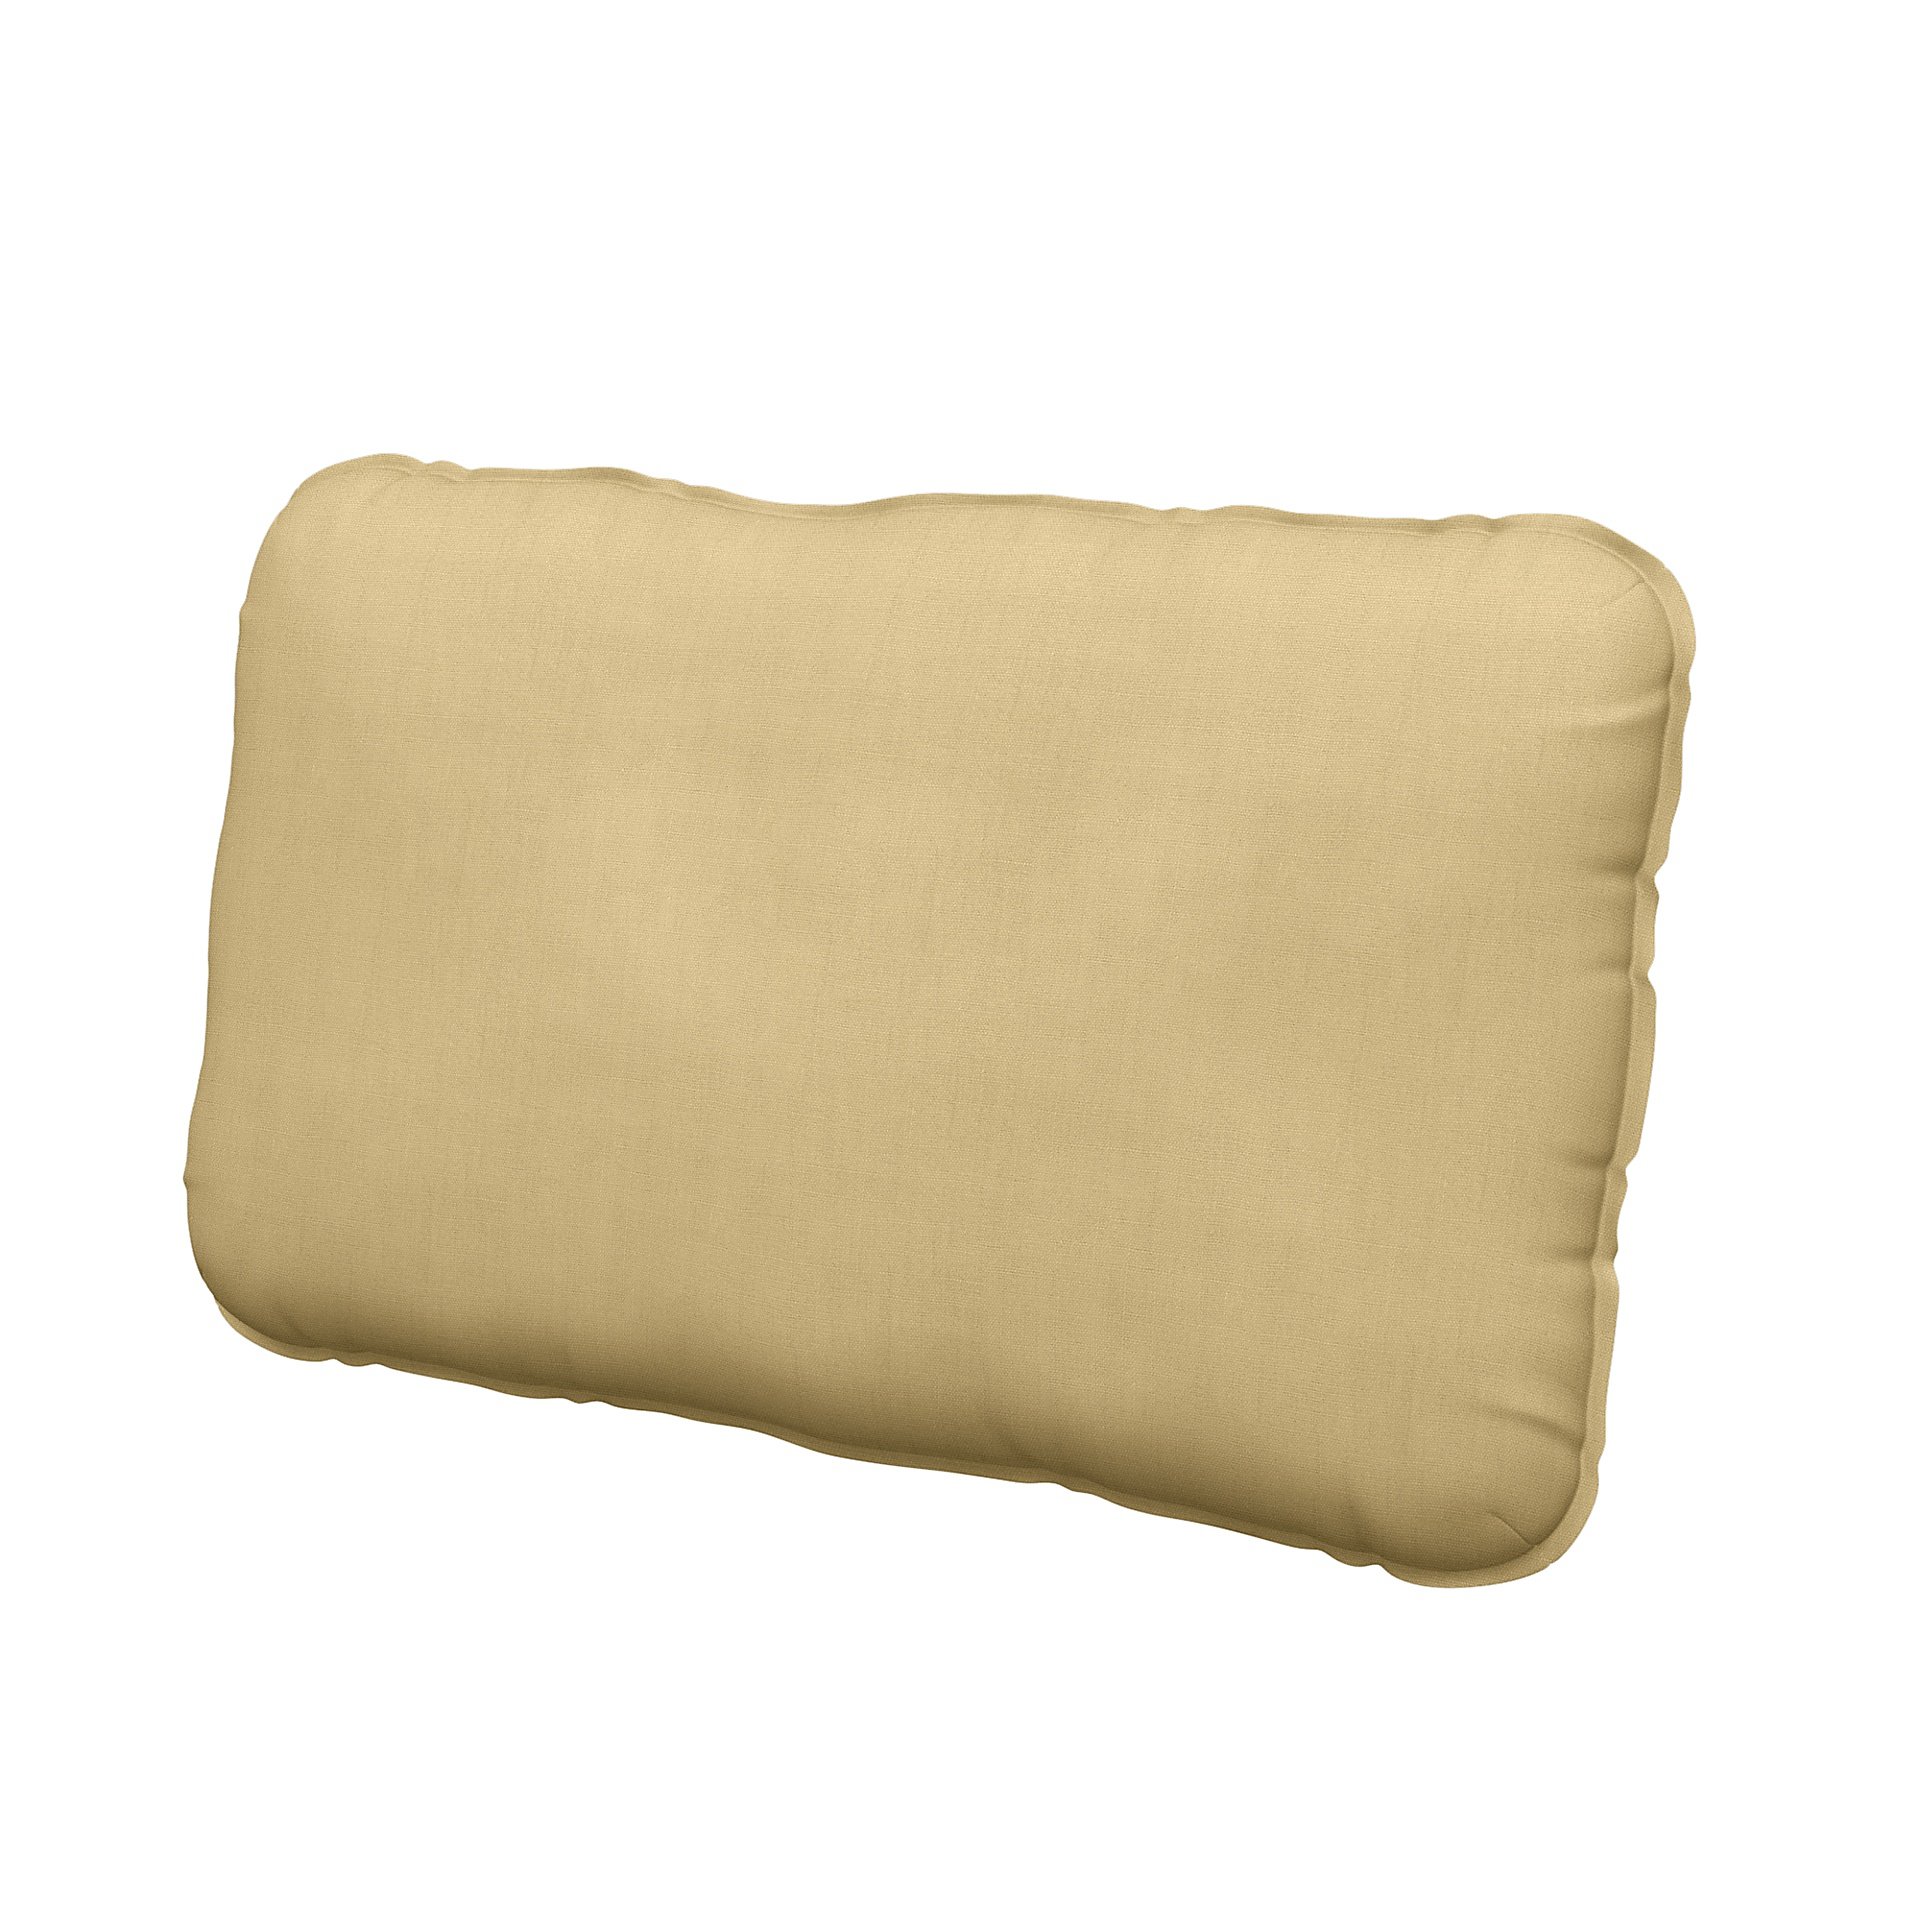 IKEA - Vallentuna back cushion cover 40x75cm, Straw Yellow, Linen - Bemz